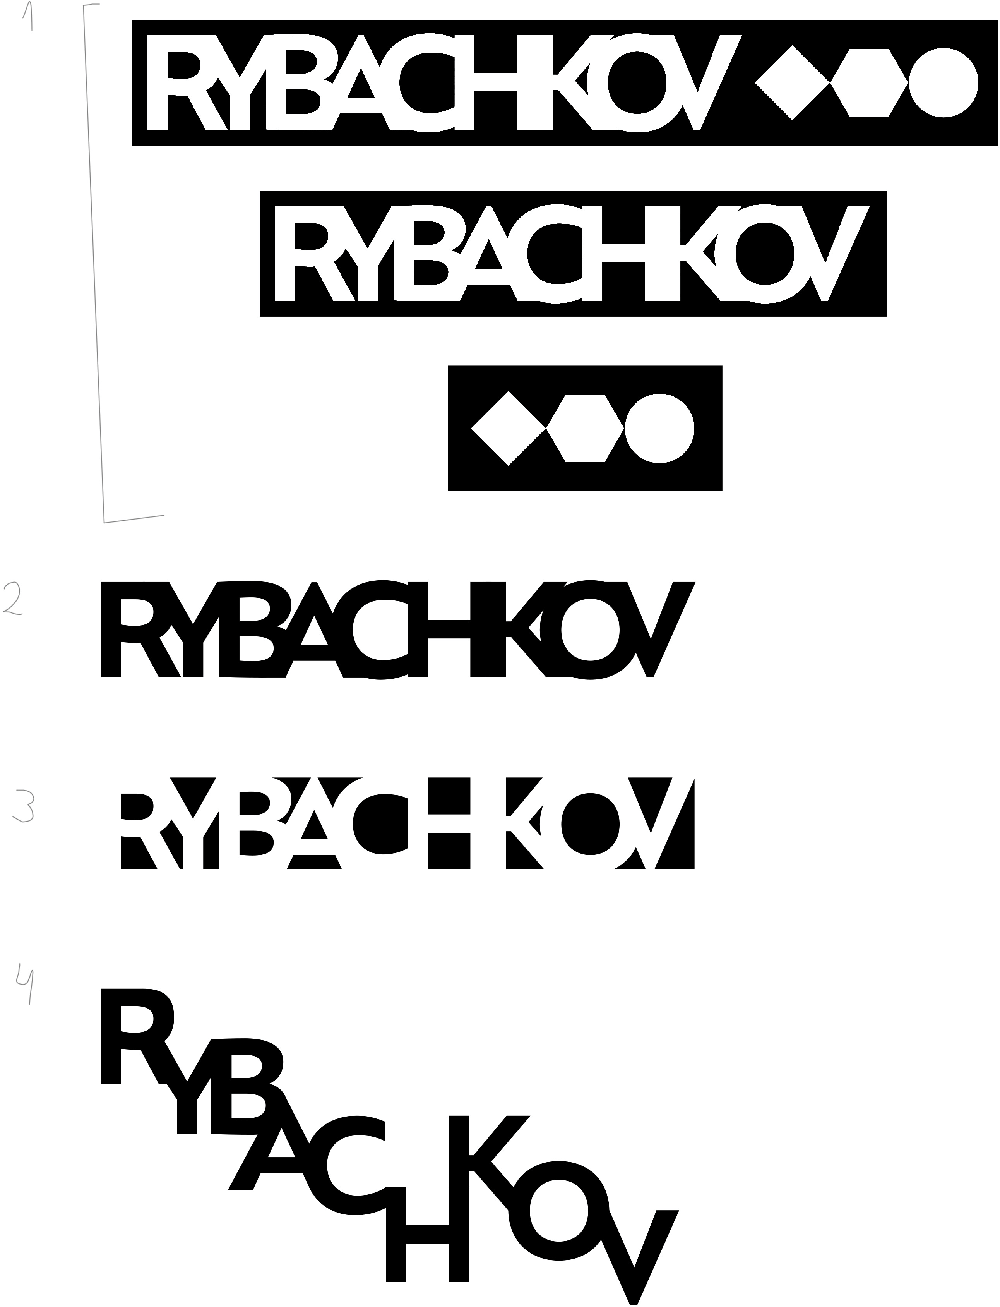 rybachkov process 02